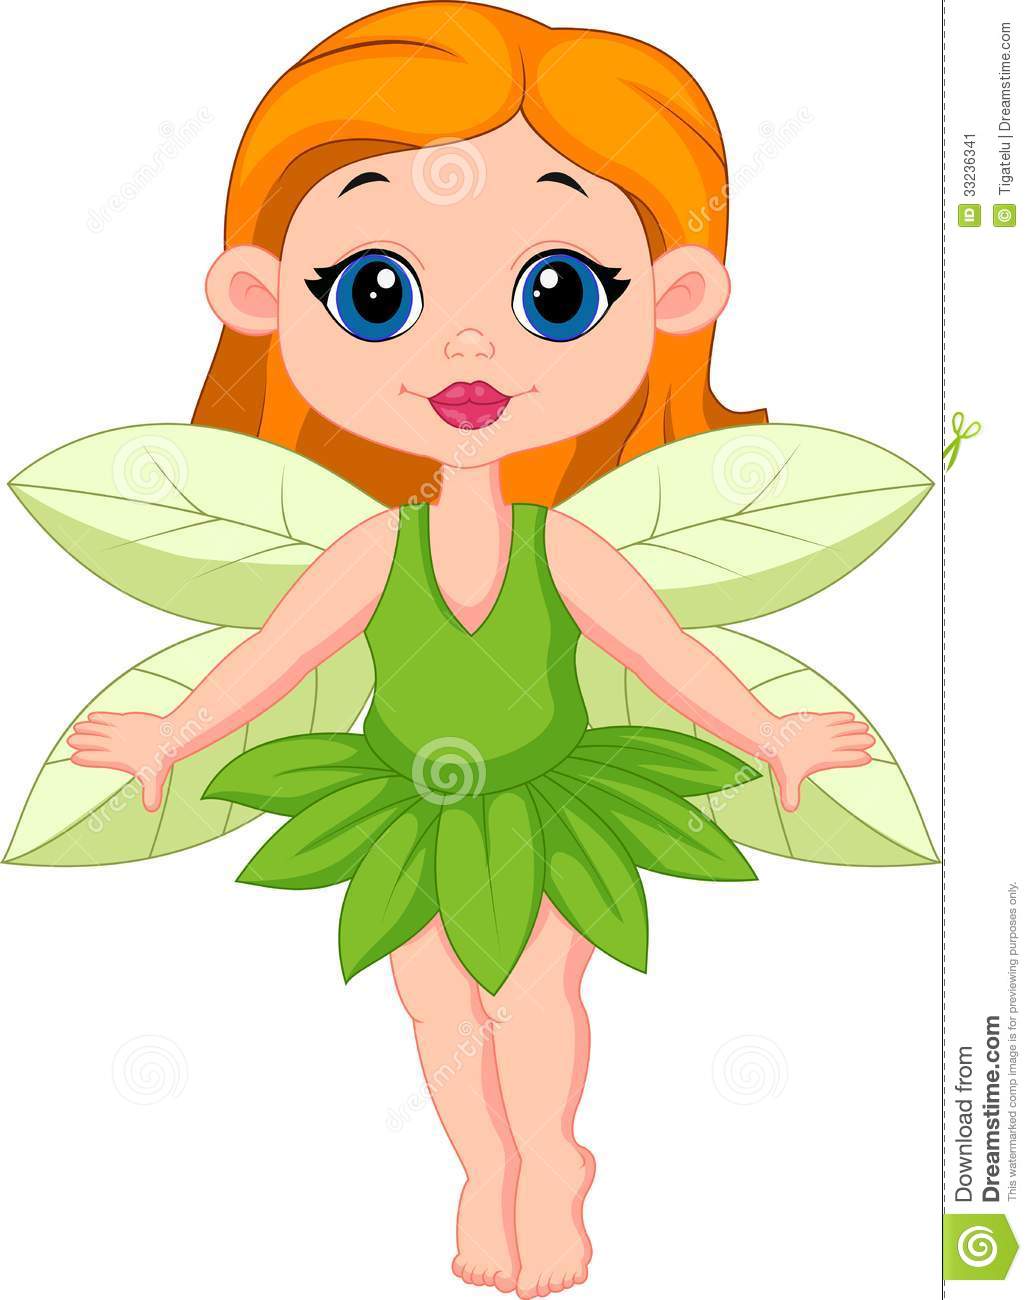 Cartoon Fairy Image High Resolution And Widescreen Wallpaper